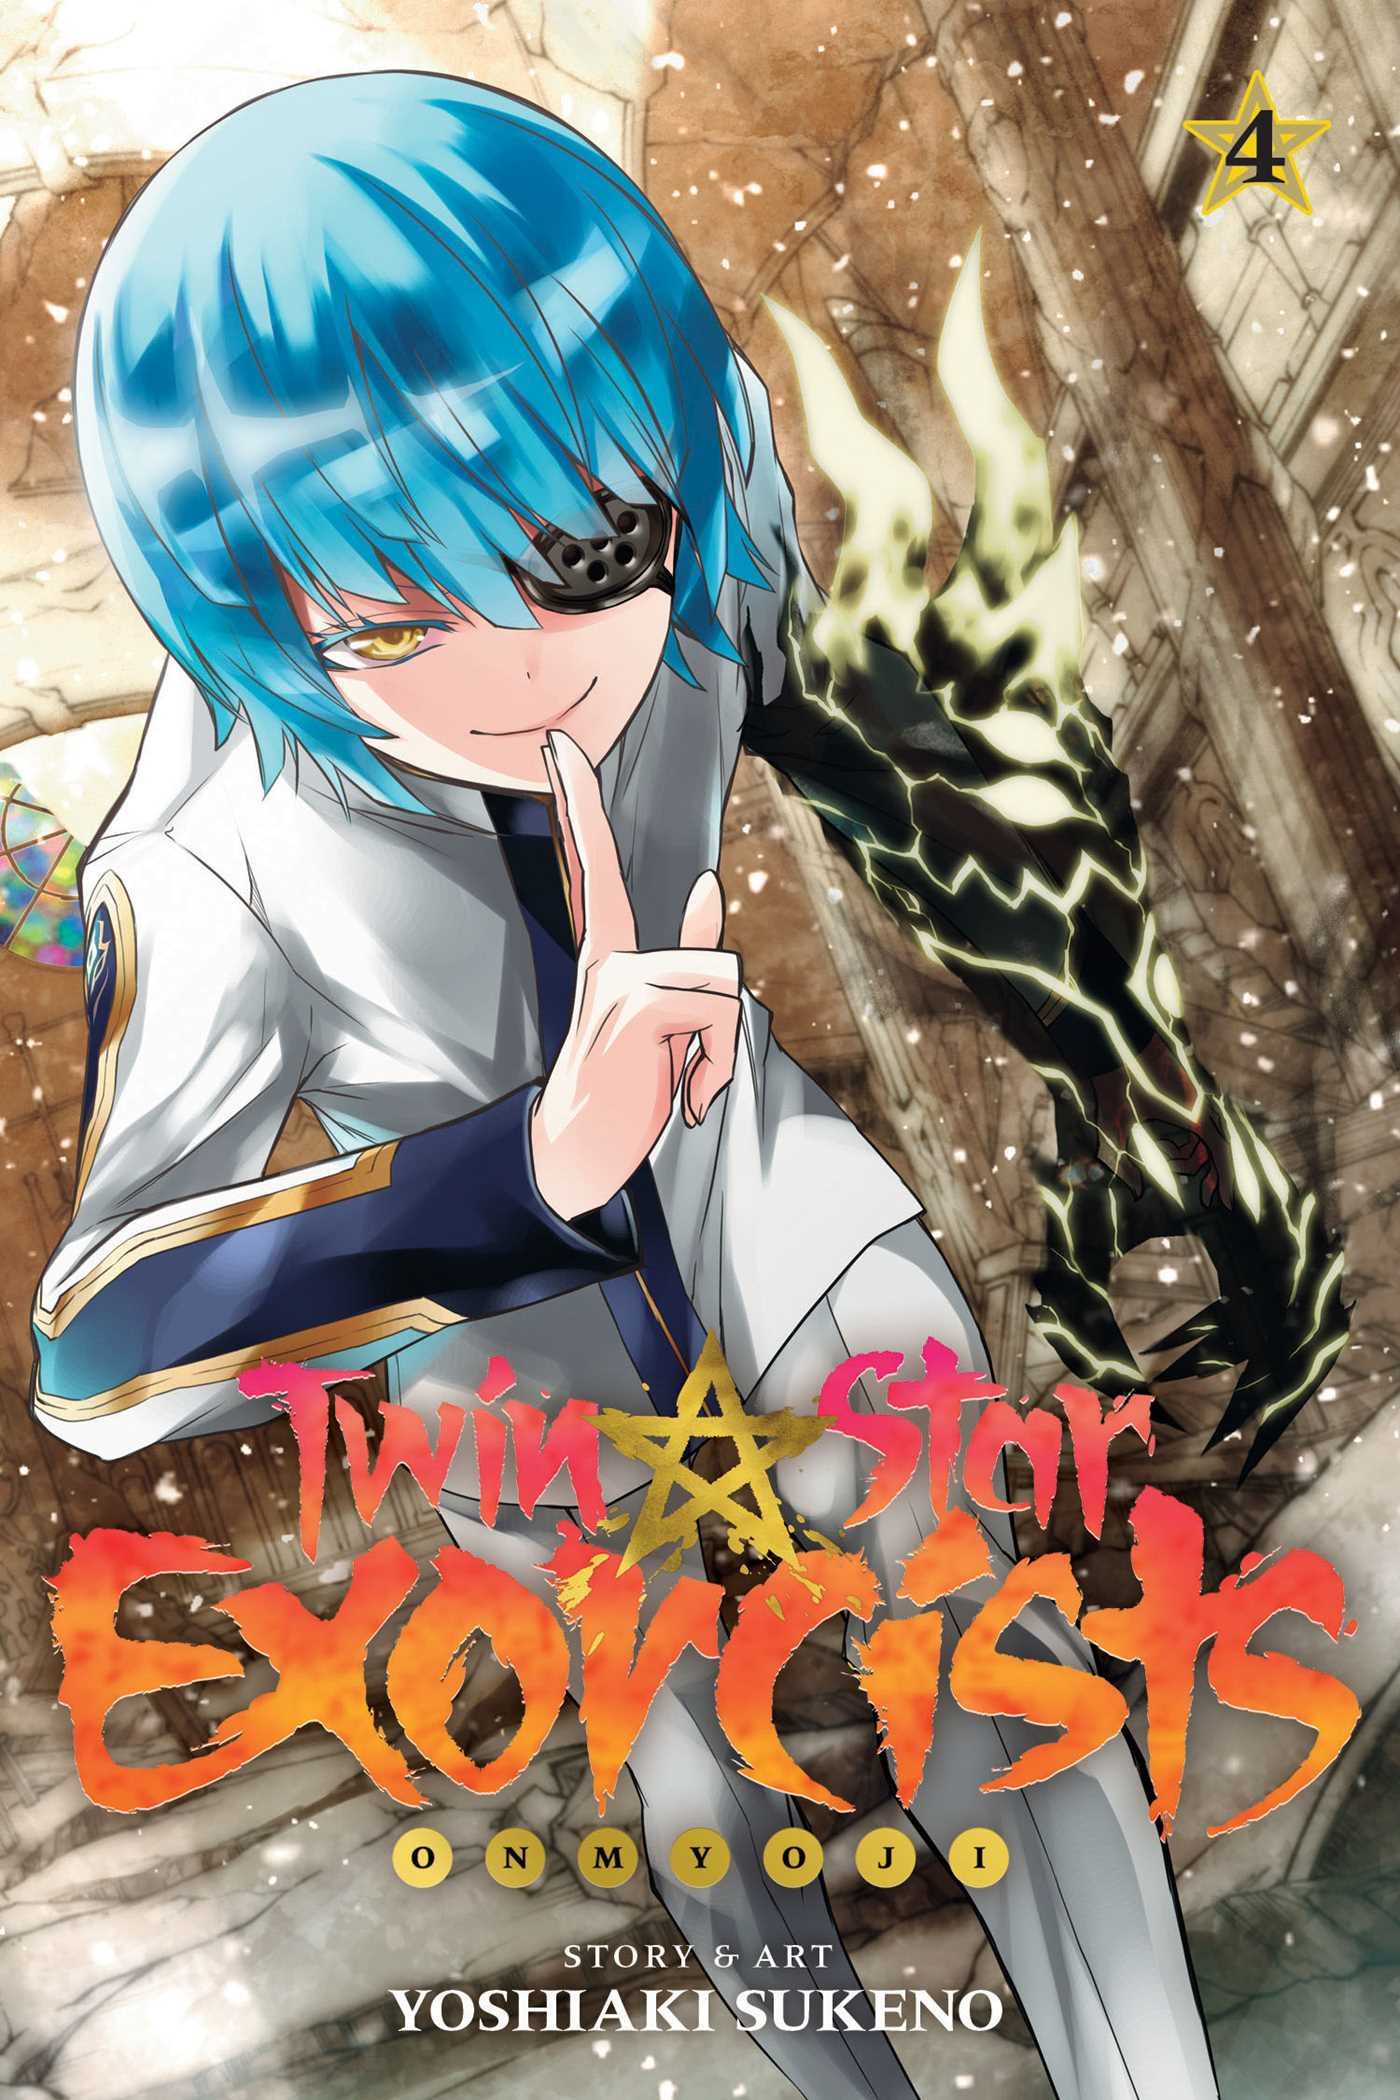 Twin Star Exorcists: Onmyoji -  Volume 4